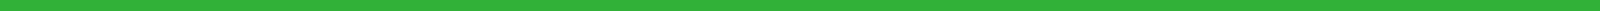 green banner.jpg